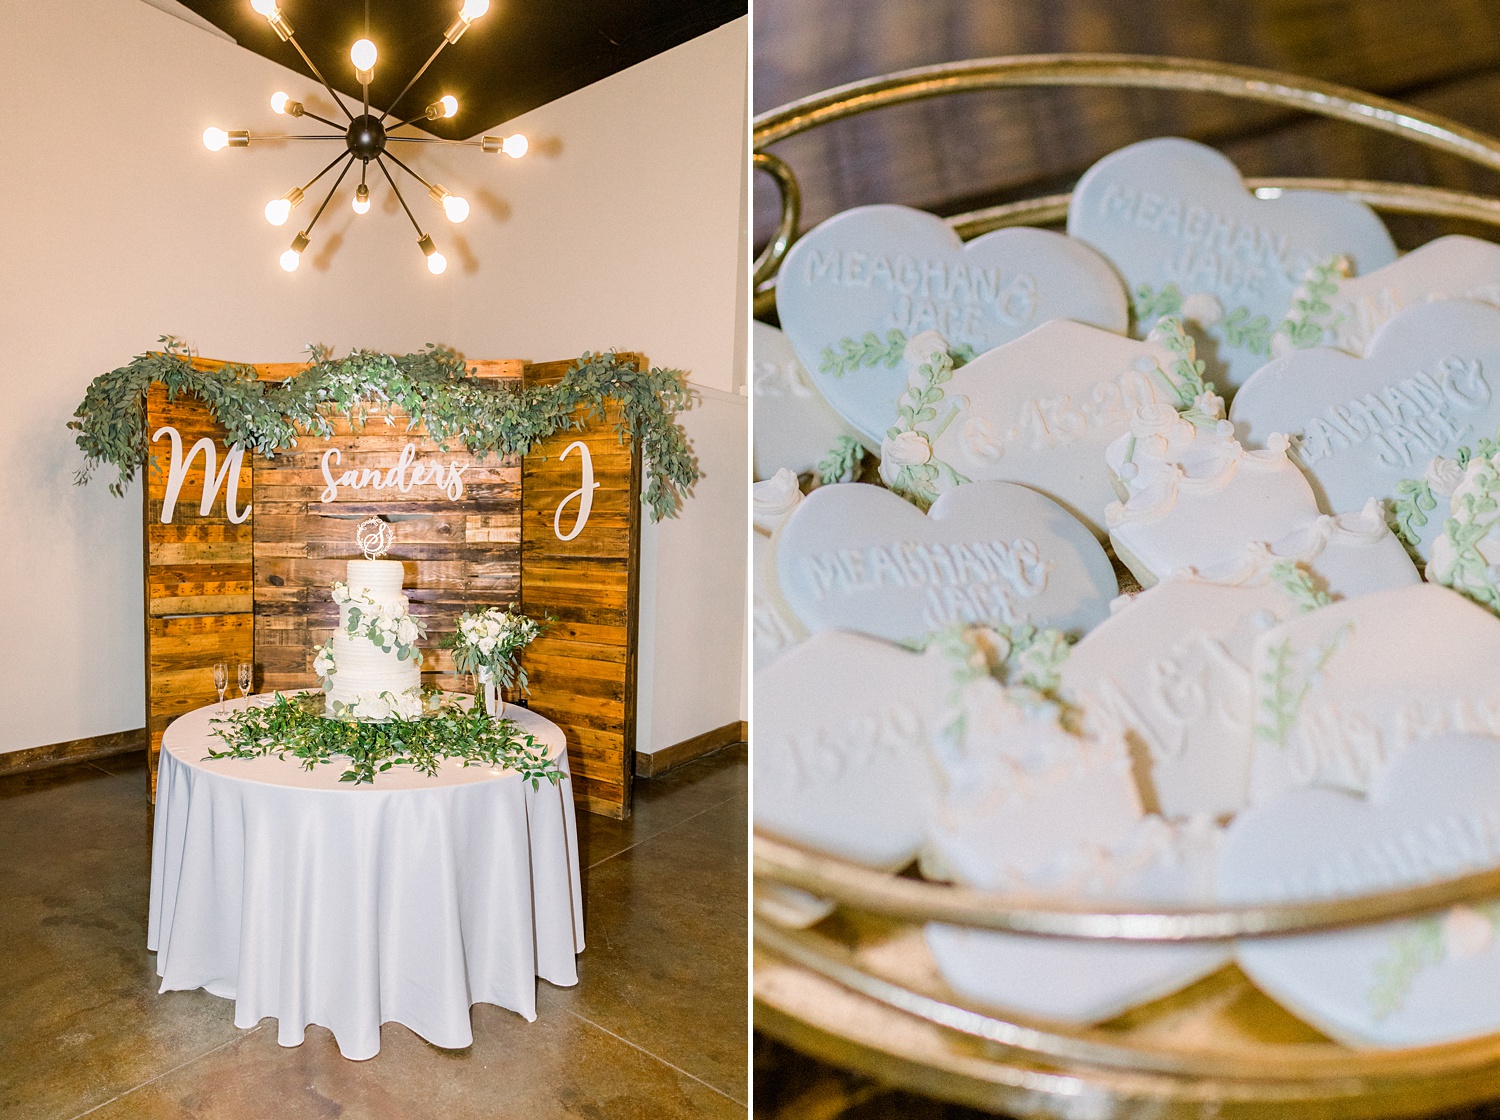 wedding cake and custom cookies for Douglas Manor wedding